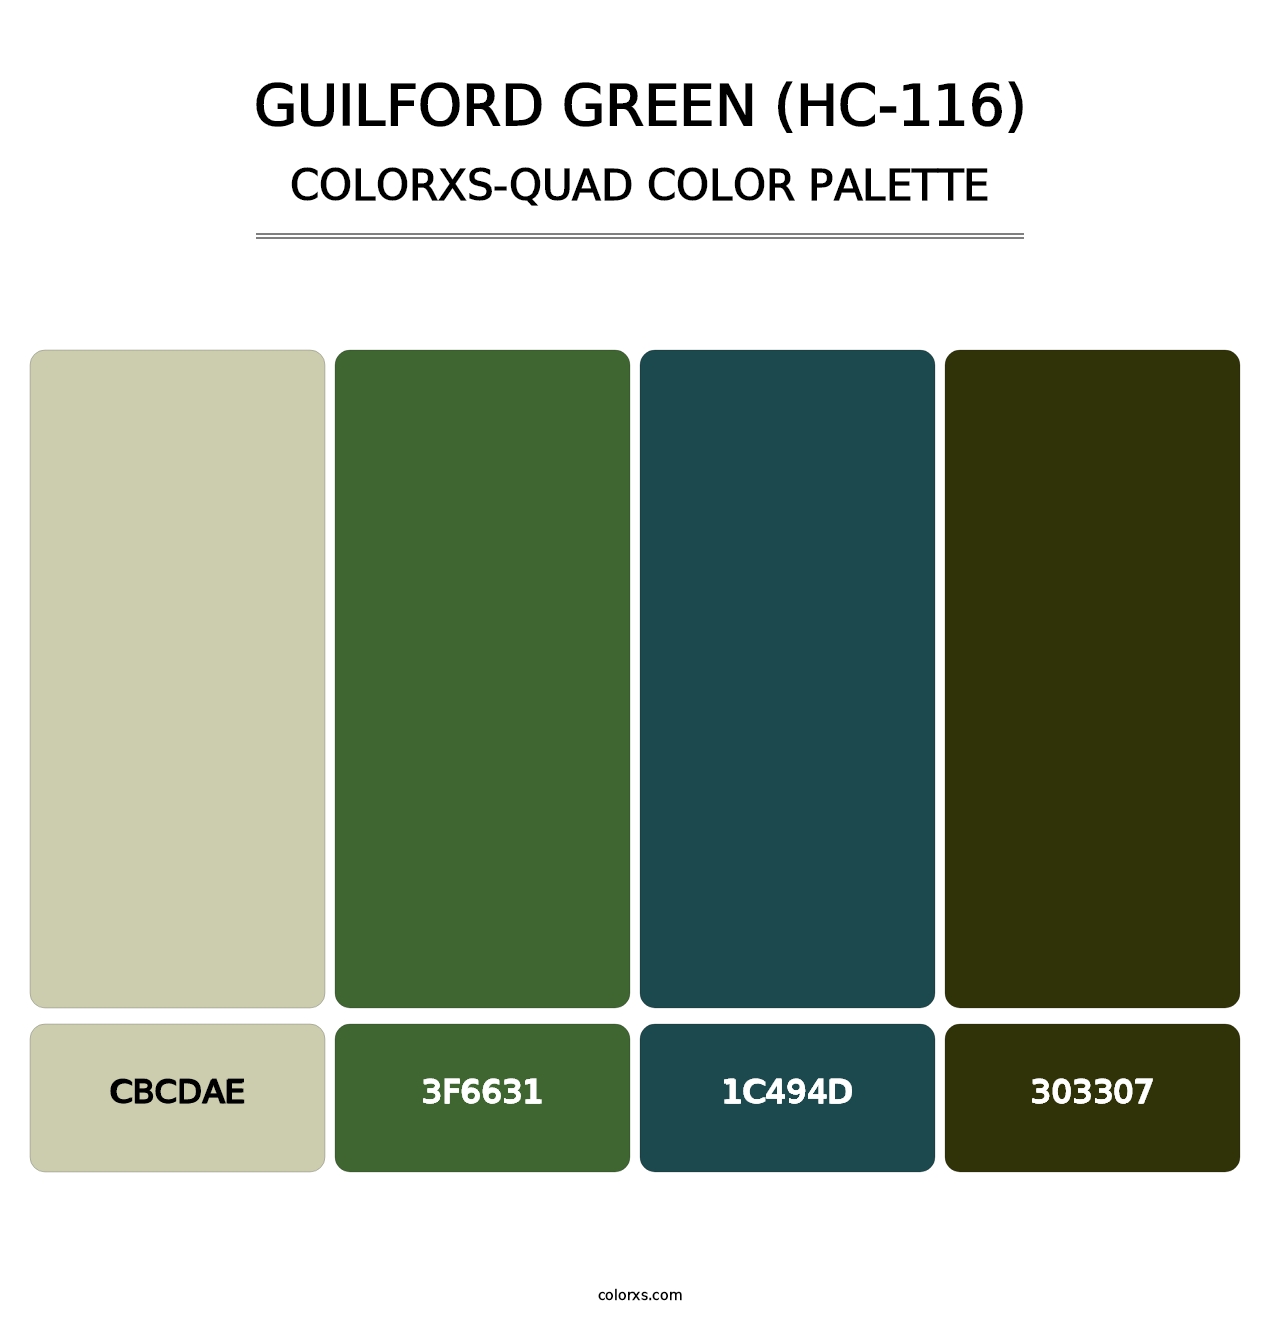 Guilford Green (HC-116) - Colorxs Quad Palette